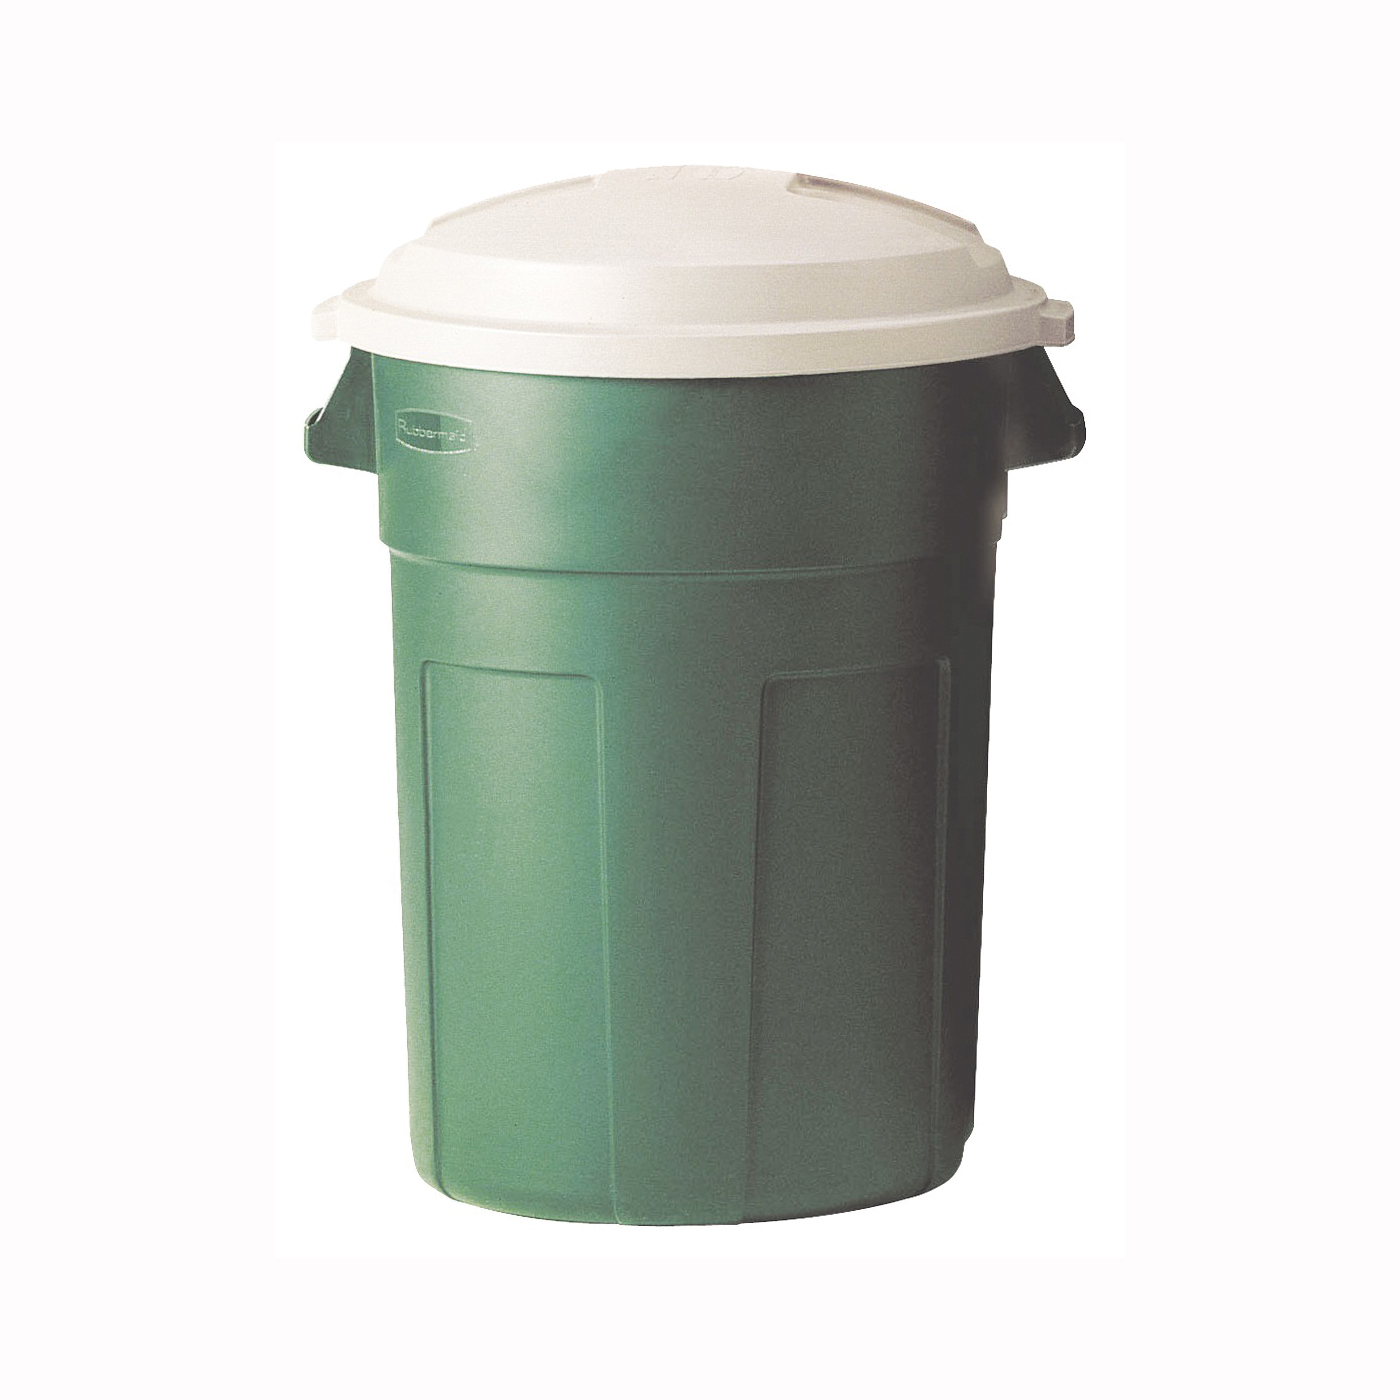 Rubbermaid 289487EGRN Trash Can, 32 gal Capacity, Evergreen, Snap-Fit Lid Closure - 1